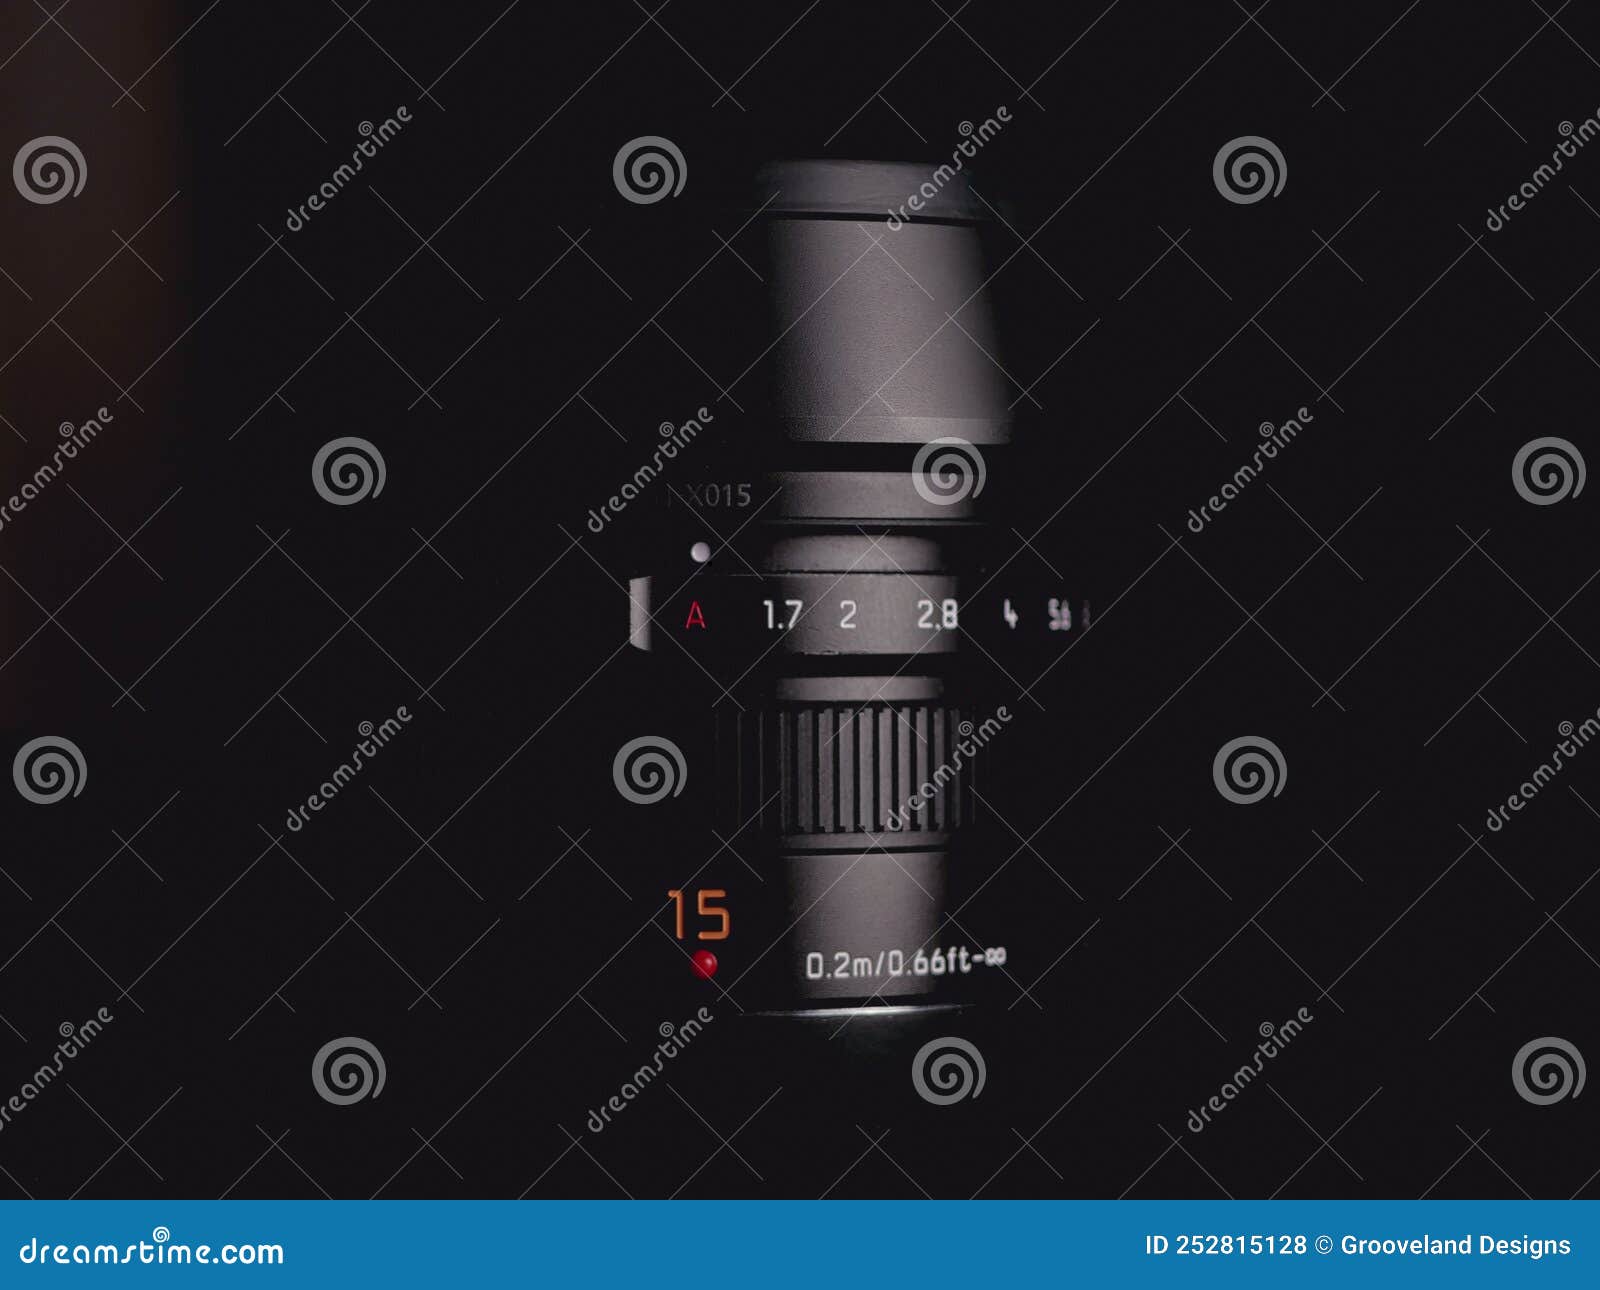 panasonic lumix g leica 15mm lens on black background